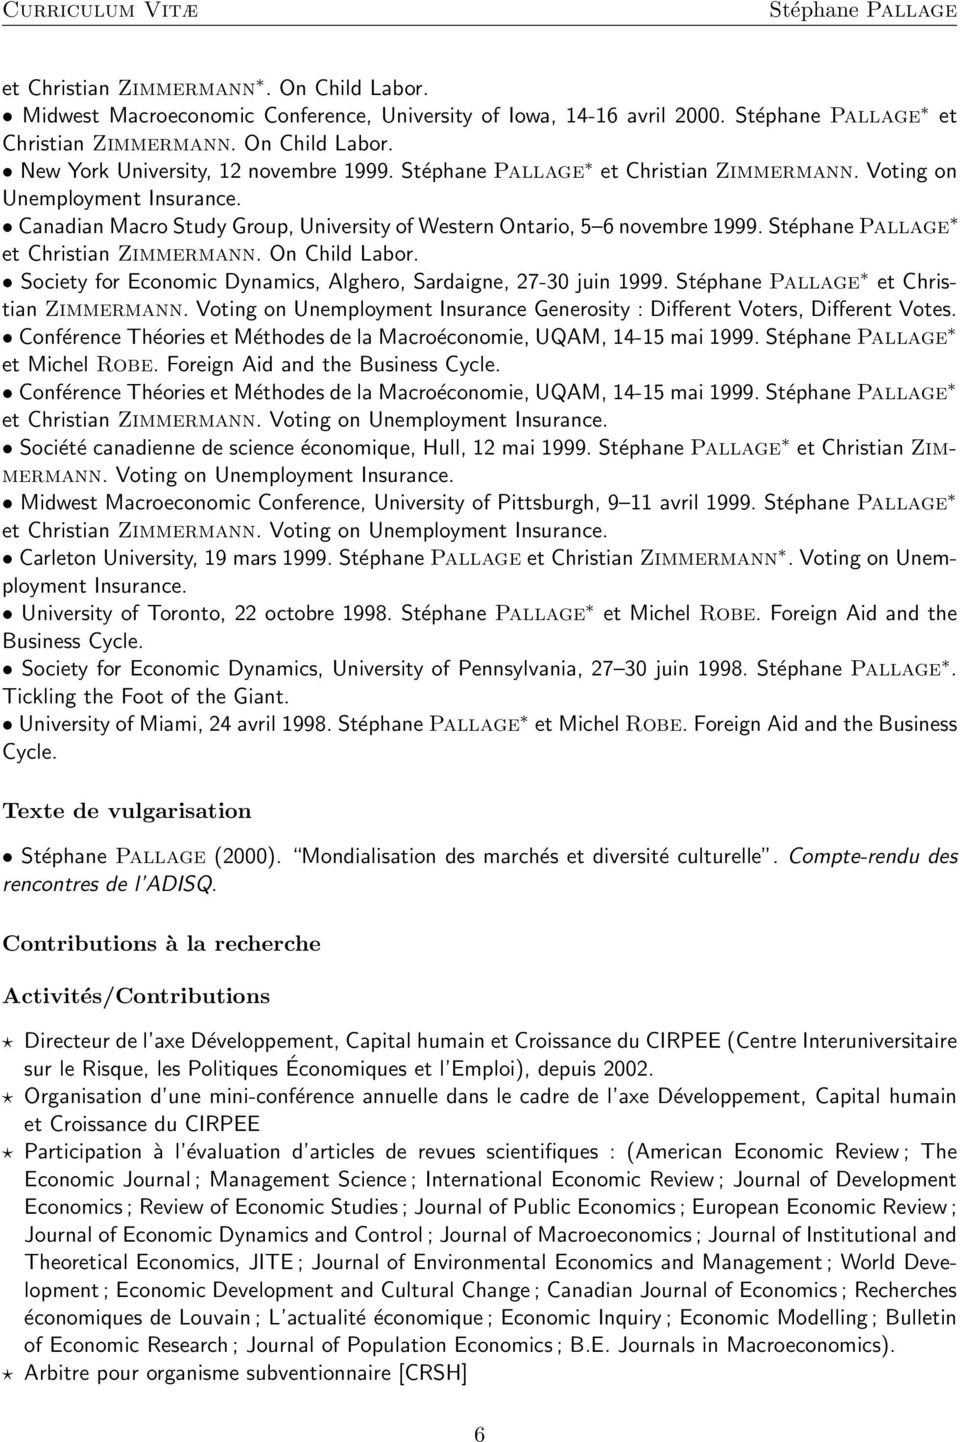 Society for Economic Dynamics, Alghero, Sardaigne, 27-30 juin 1999. et Christian Zimmermann. Voting on Unemployment Insurance Generosity : Different Voters, Different Votes.